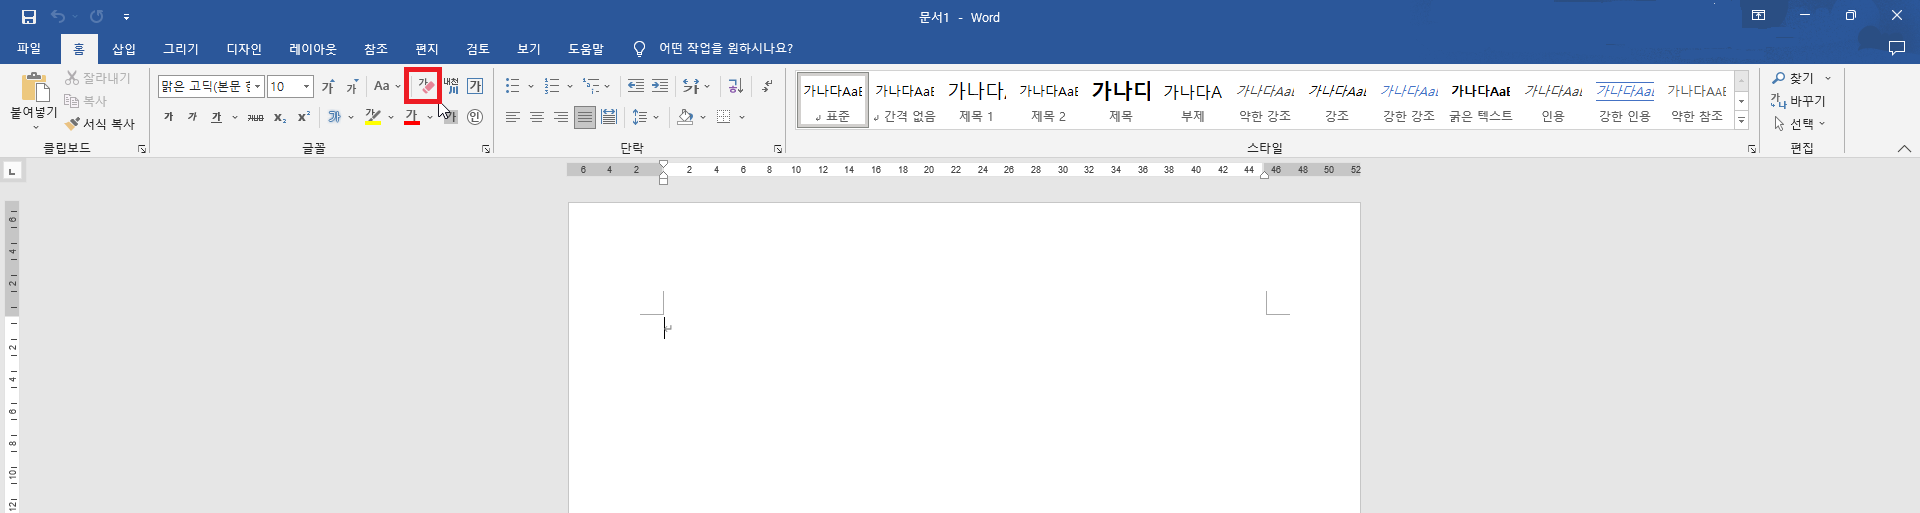 msword2019_erase_koreanhangul_ga_example.png